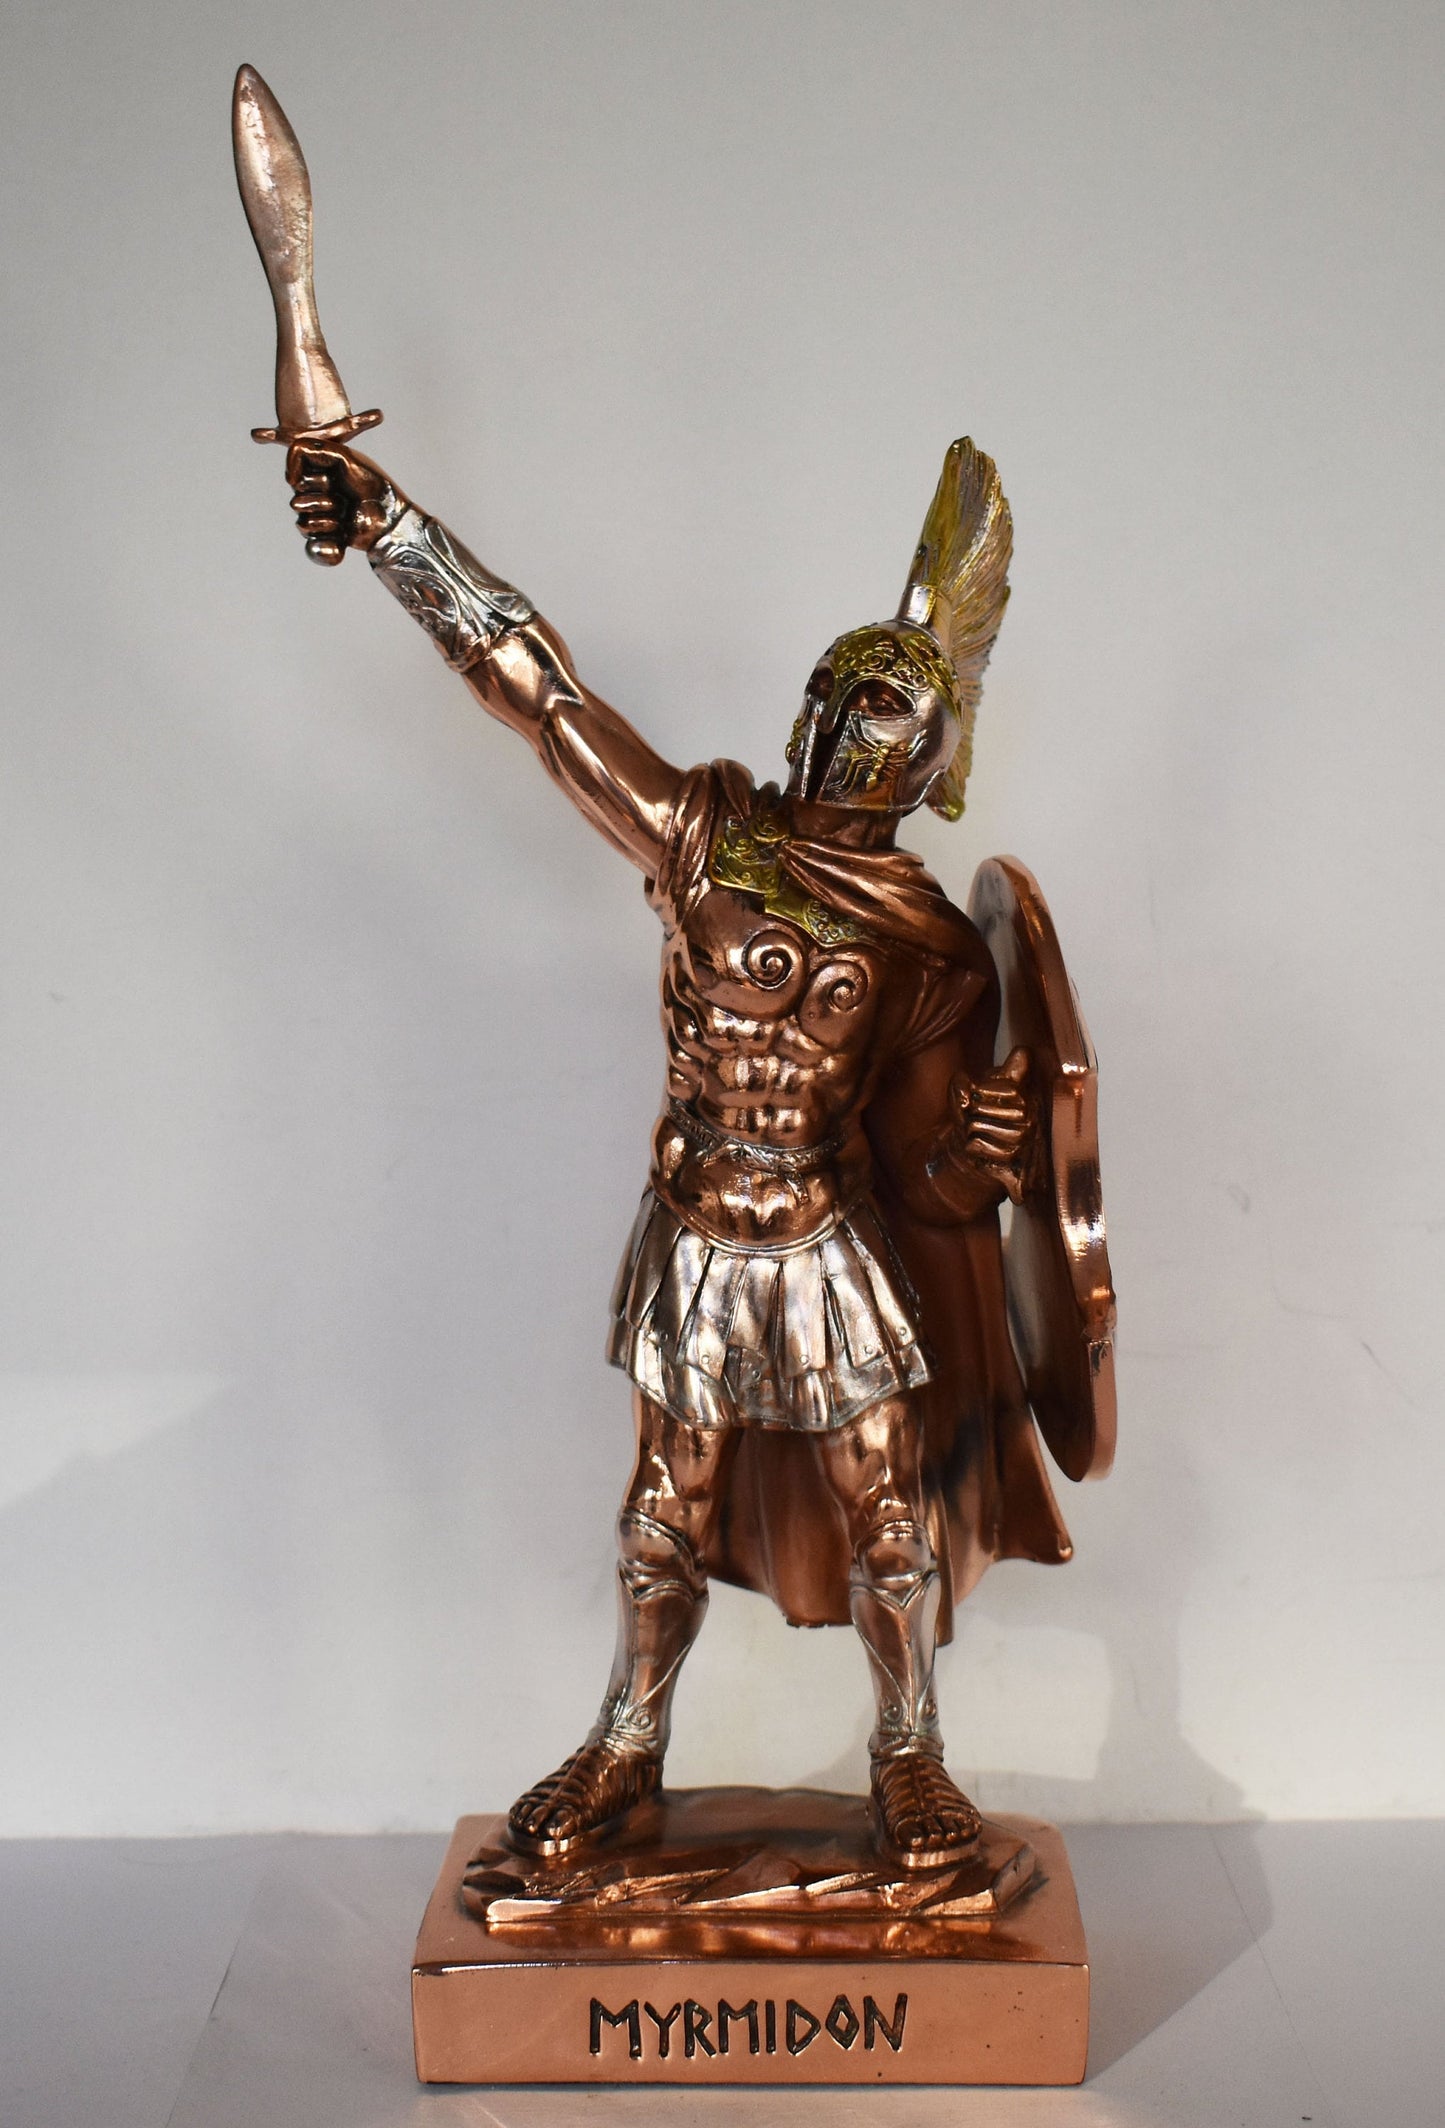 Myrmidon Soldier - Ancient Nation of Greek Mythology - Achilles Army - Homer's Iliad - Trojan War - Copper Plated Alabaster